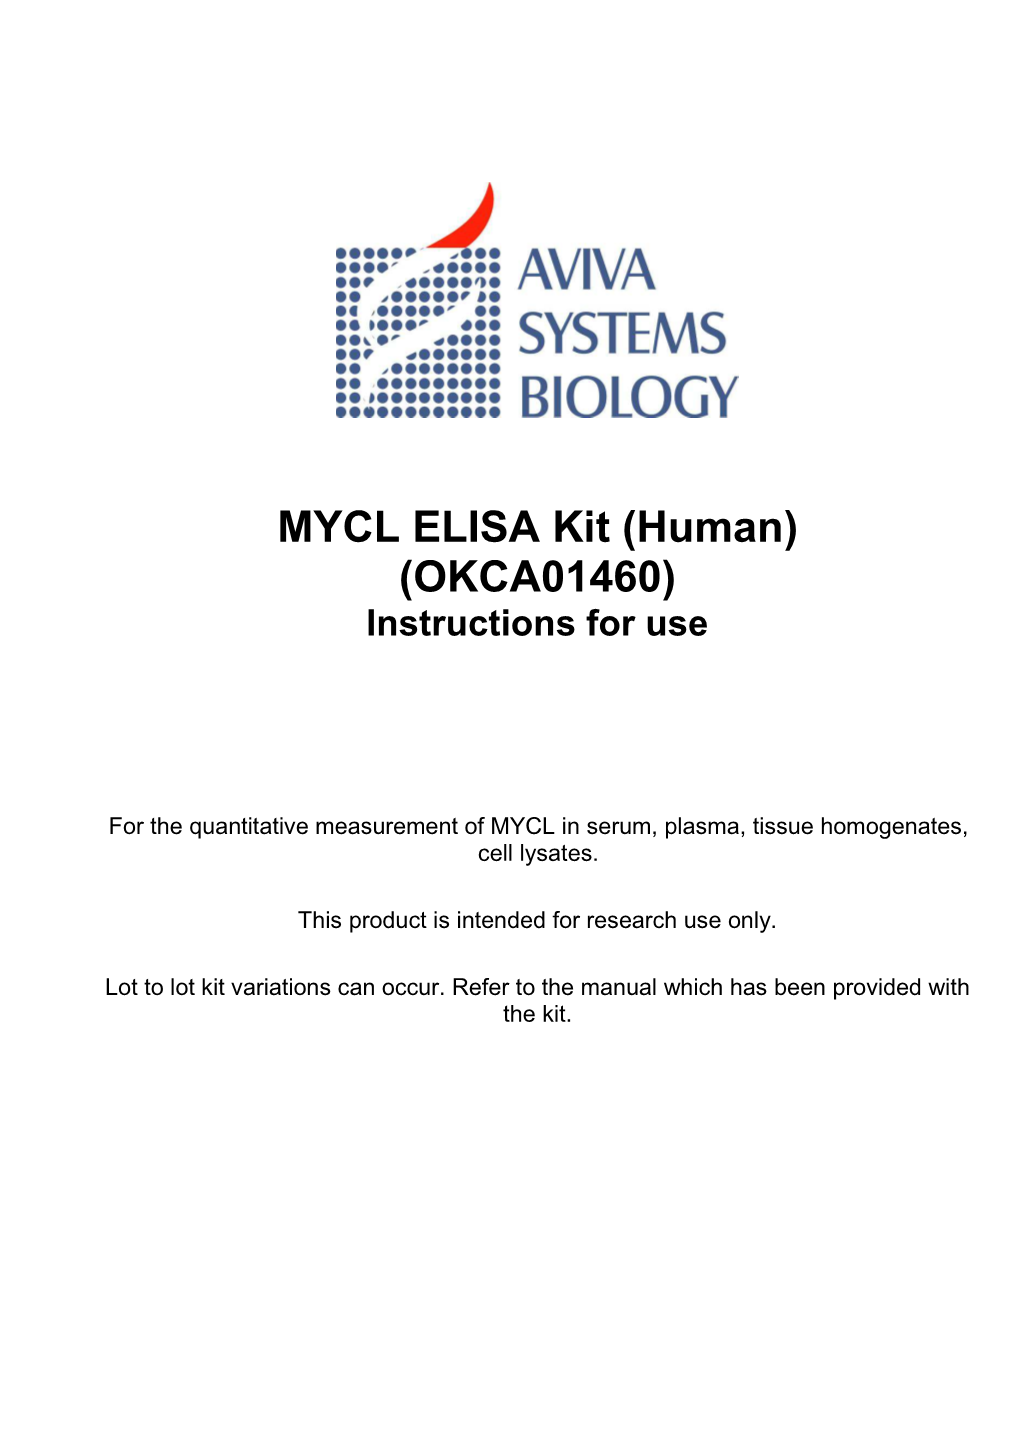 MYCL ELISA Kit (Human) (OKCA01460) Instructions for Use